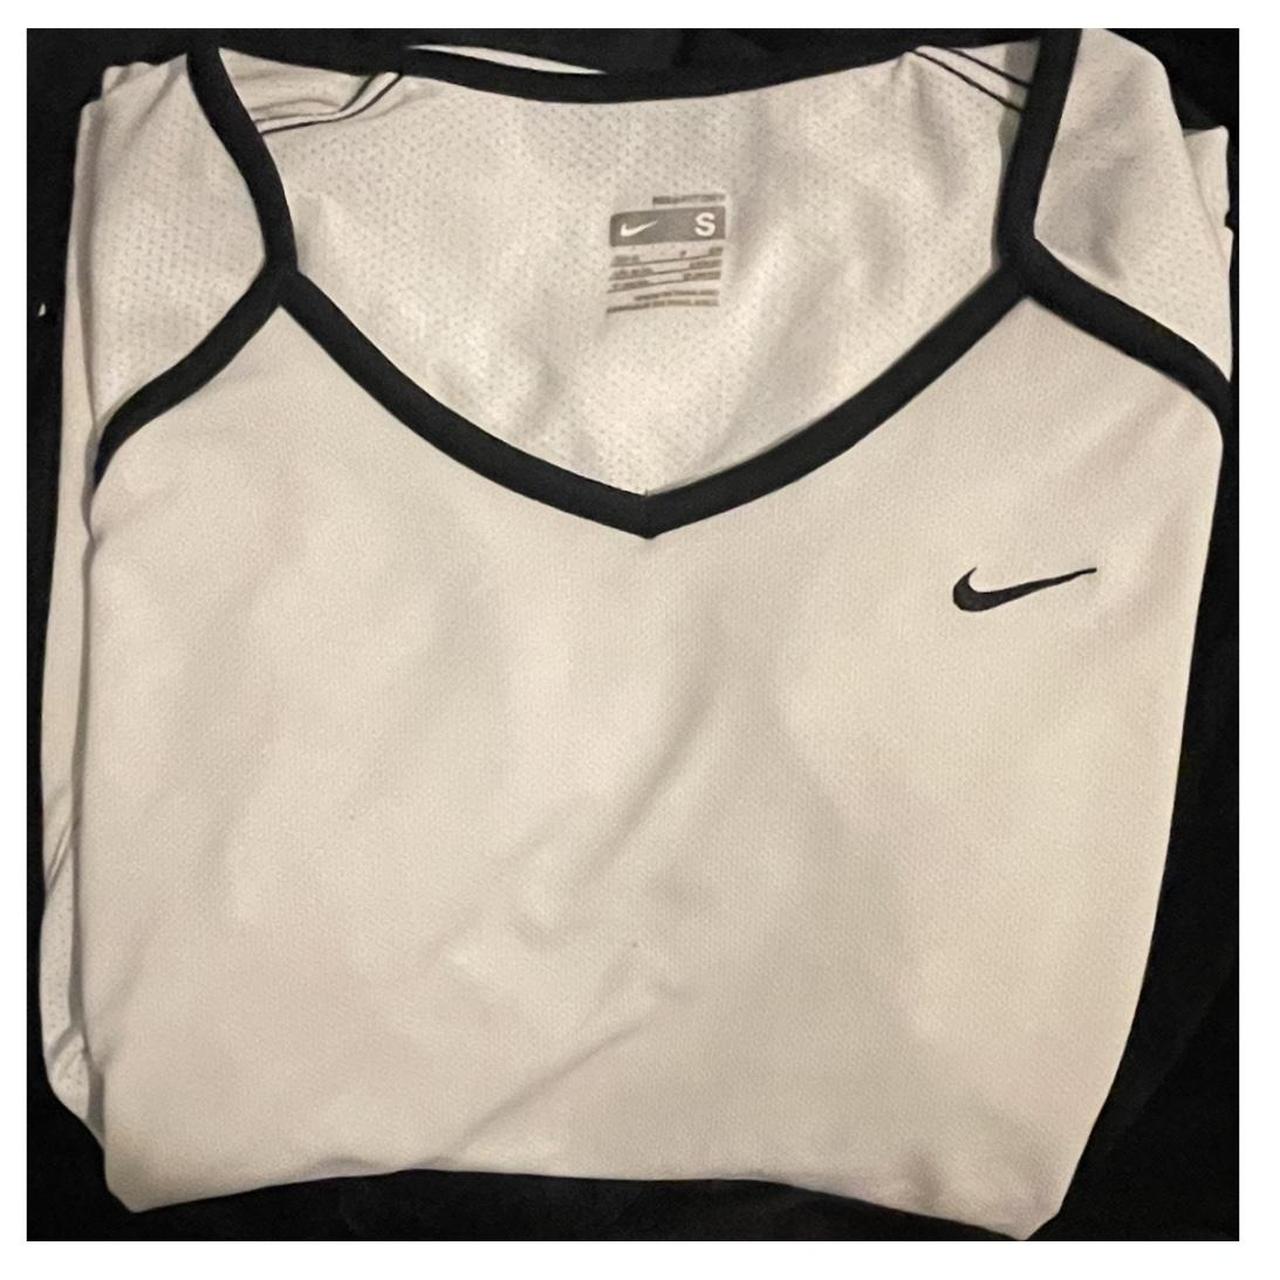 Nike tennis t shirt - Depop